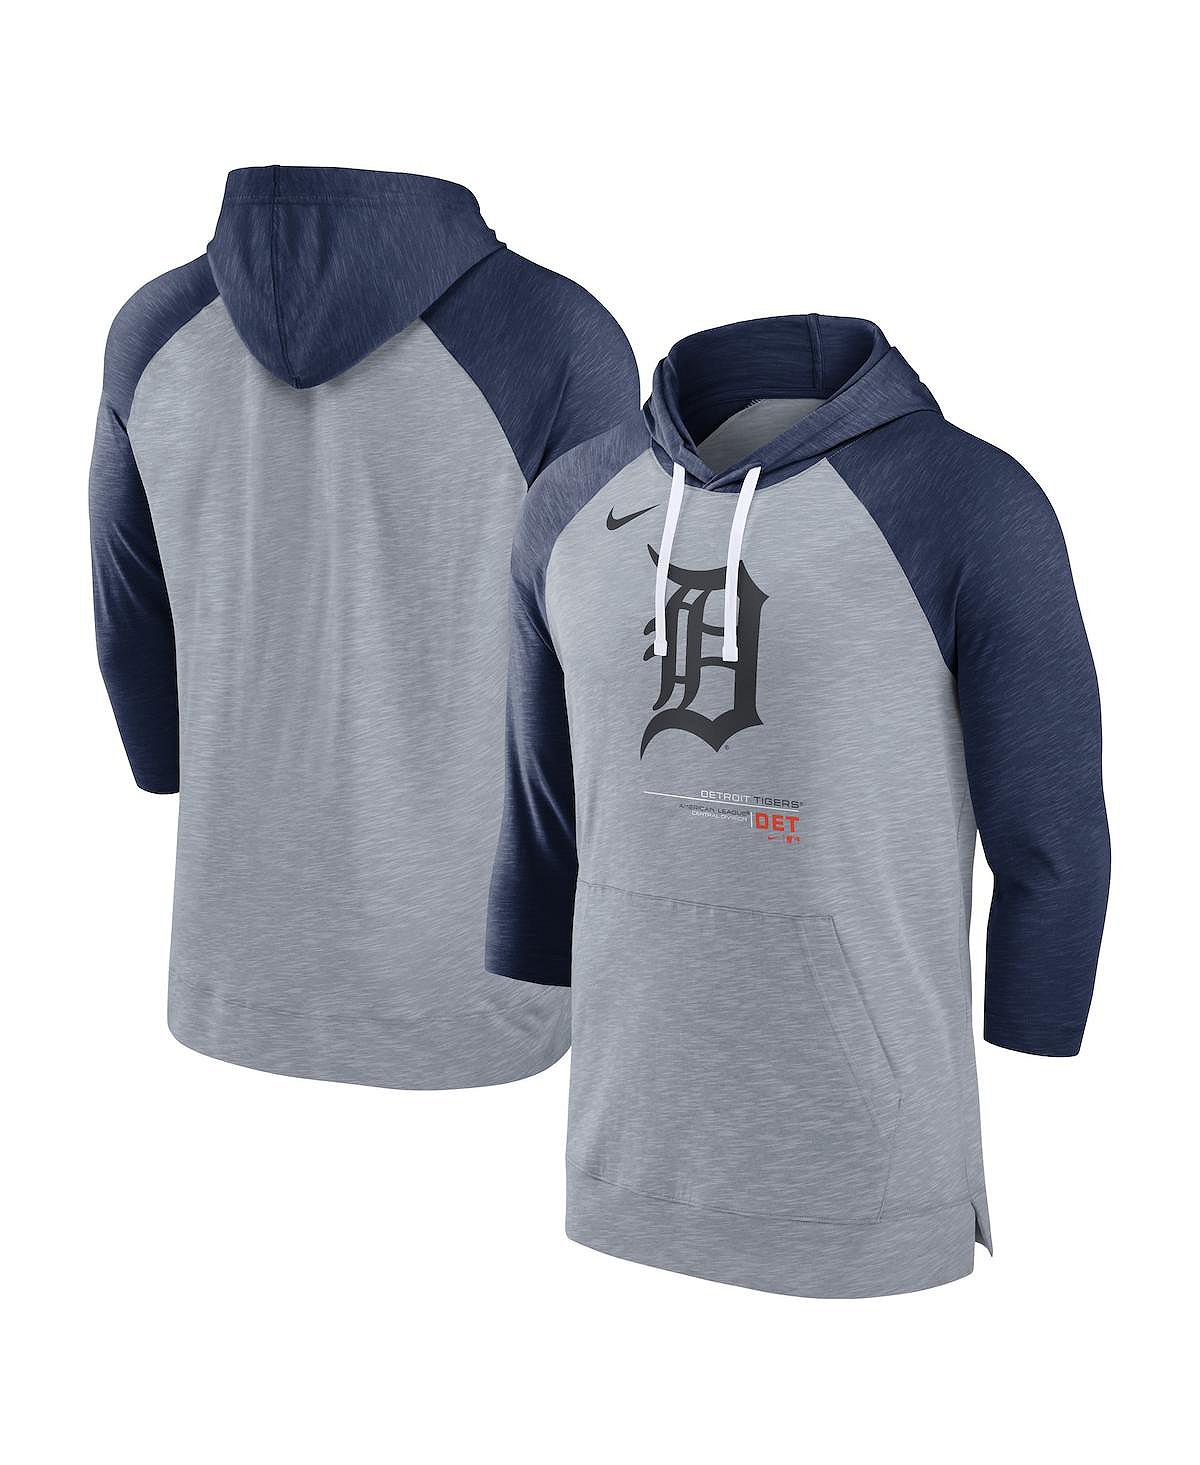 цена Мужской пуловер с капюшоном с капюшоном цвета реглан, серый Хизер, темно-синий Хизер Detroit Tigers Бейсбол реглан с рукавами 3/4 Nike